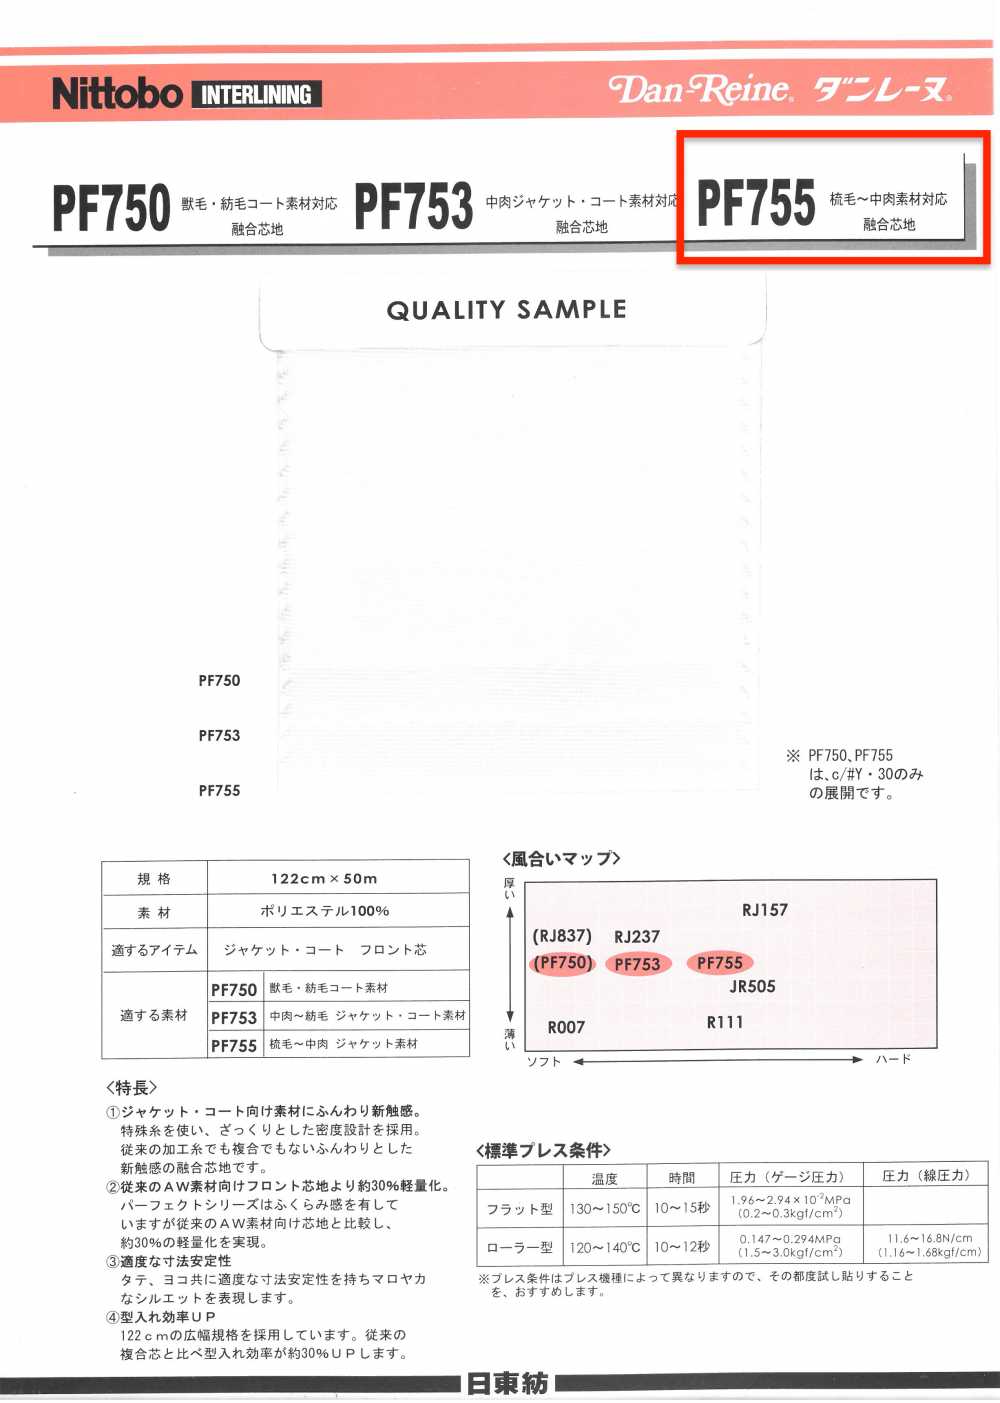 PF755 단레누 소모사 ~ 중 두께 소재 대응 융합 심지 닛토보 (닛토보인터라이닝)